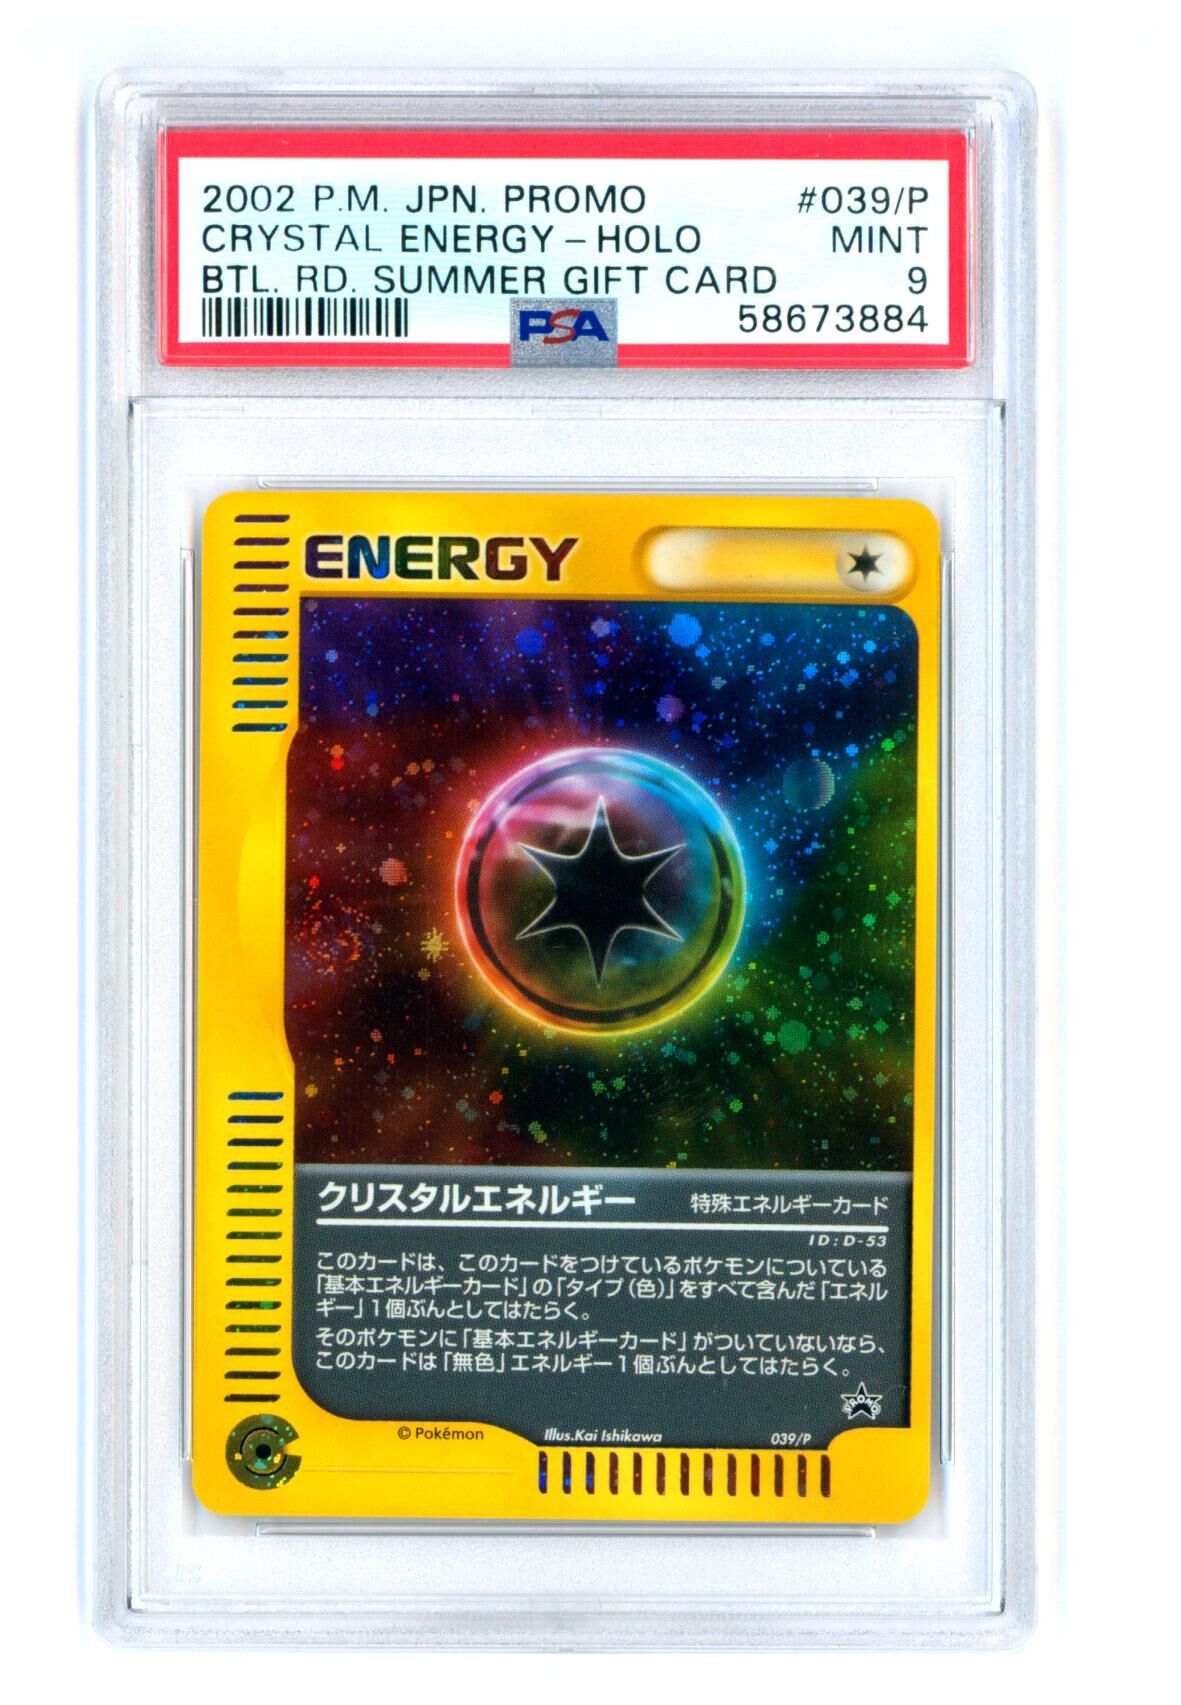 Crystal Energy 039/P - Battle Road Summer Gift Promo - Holo - PSA 9 MINT​ - Pokémon